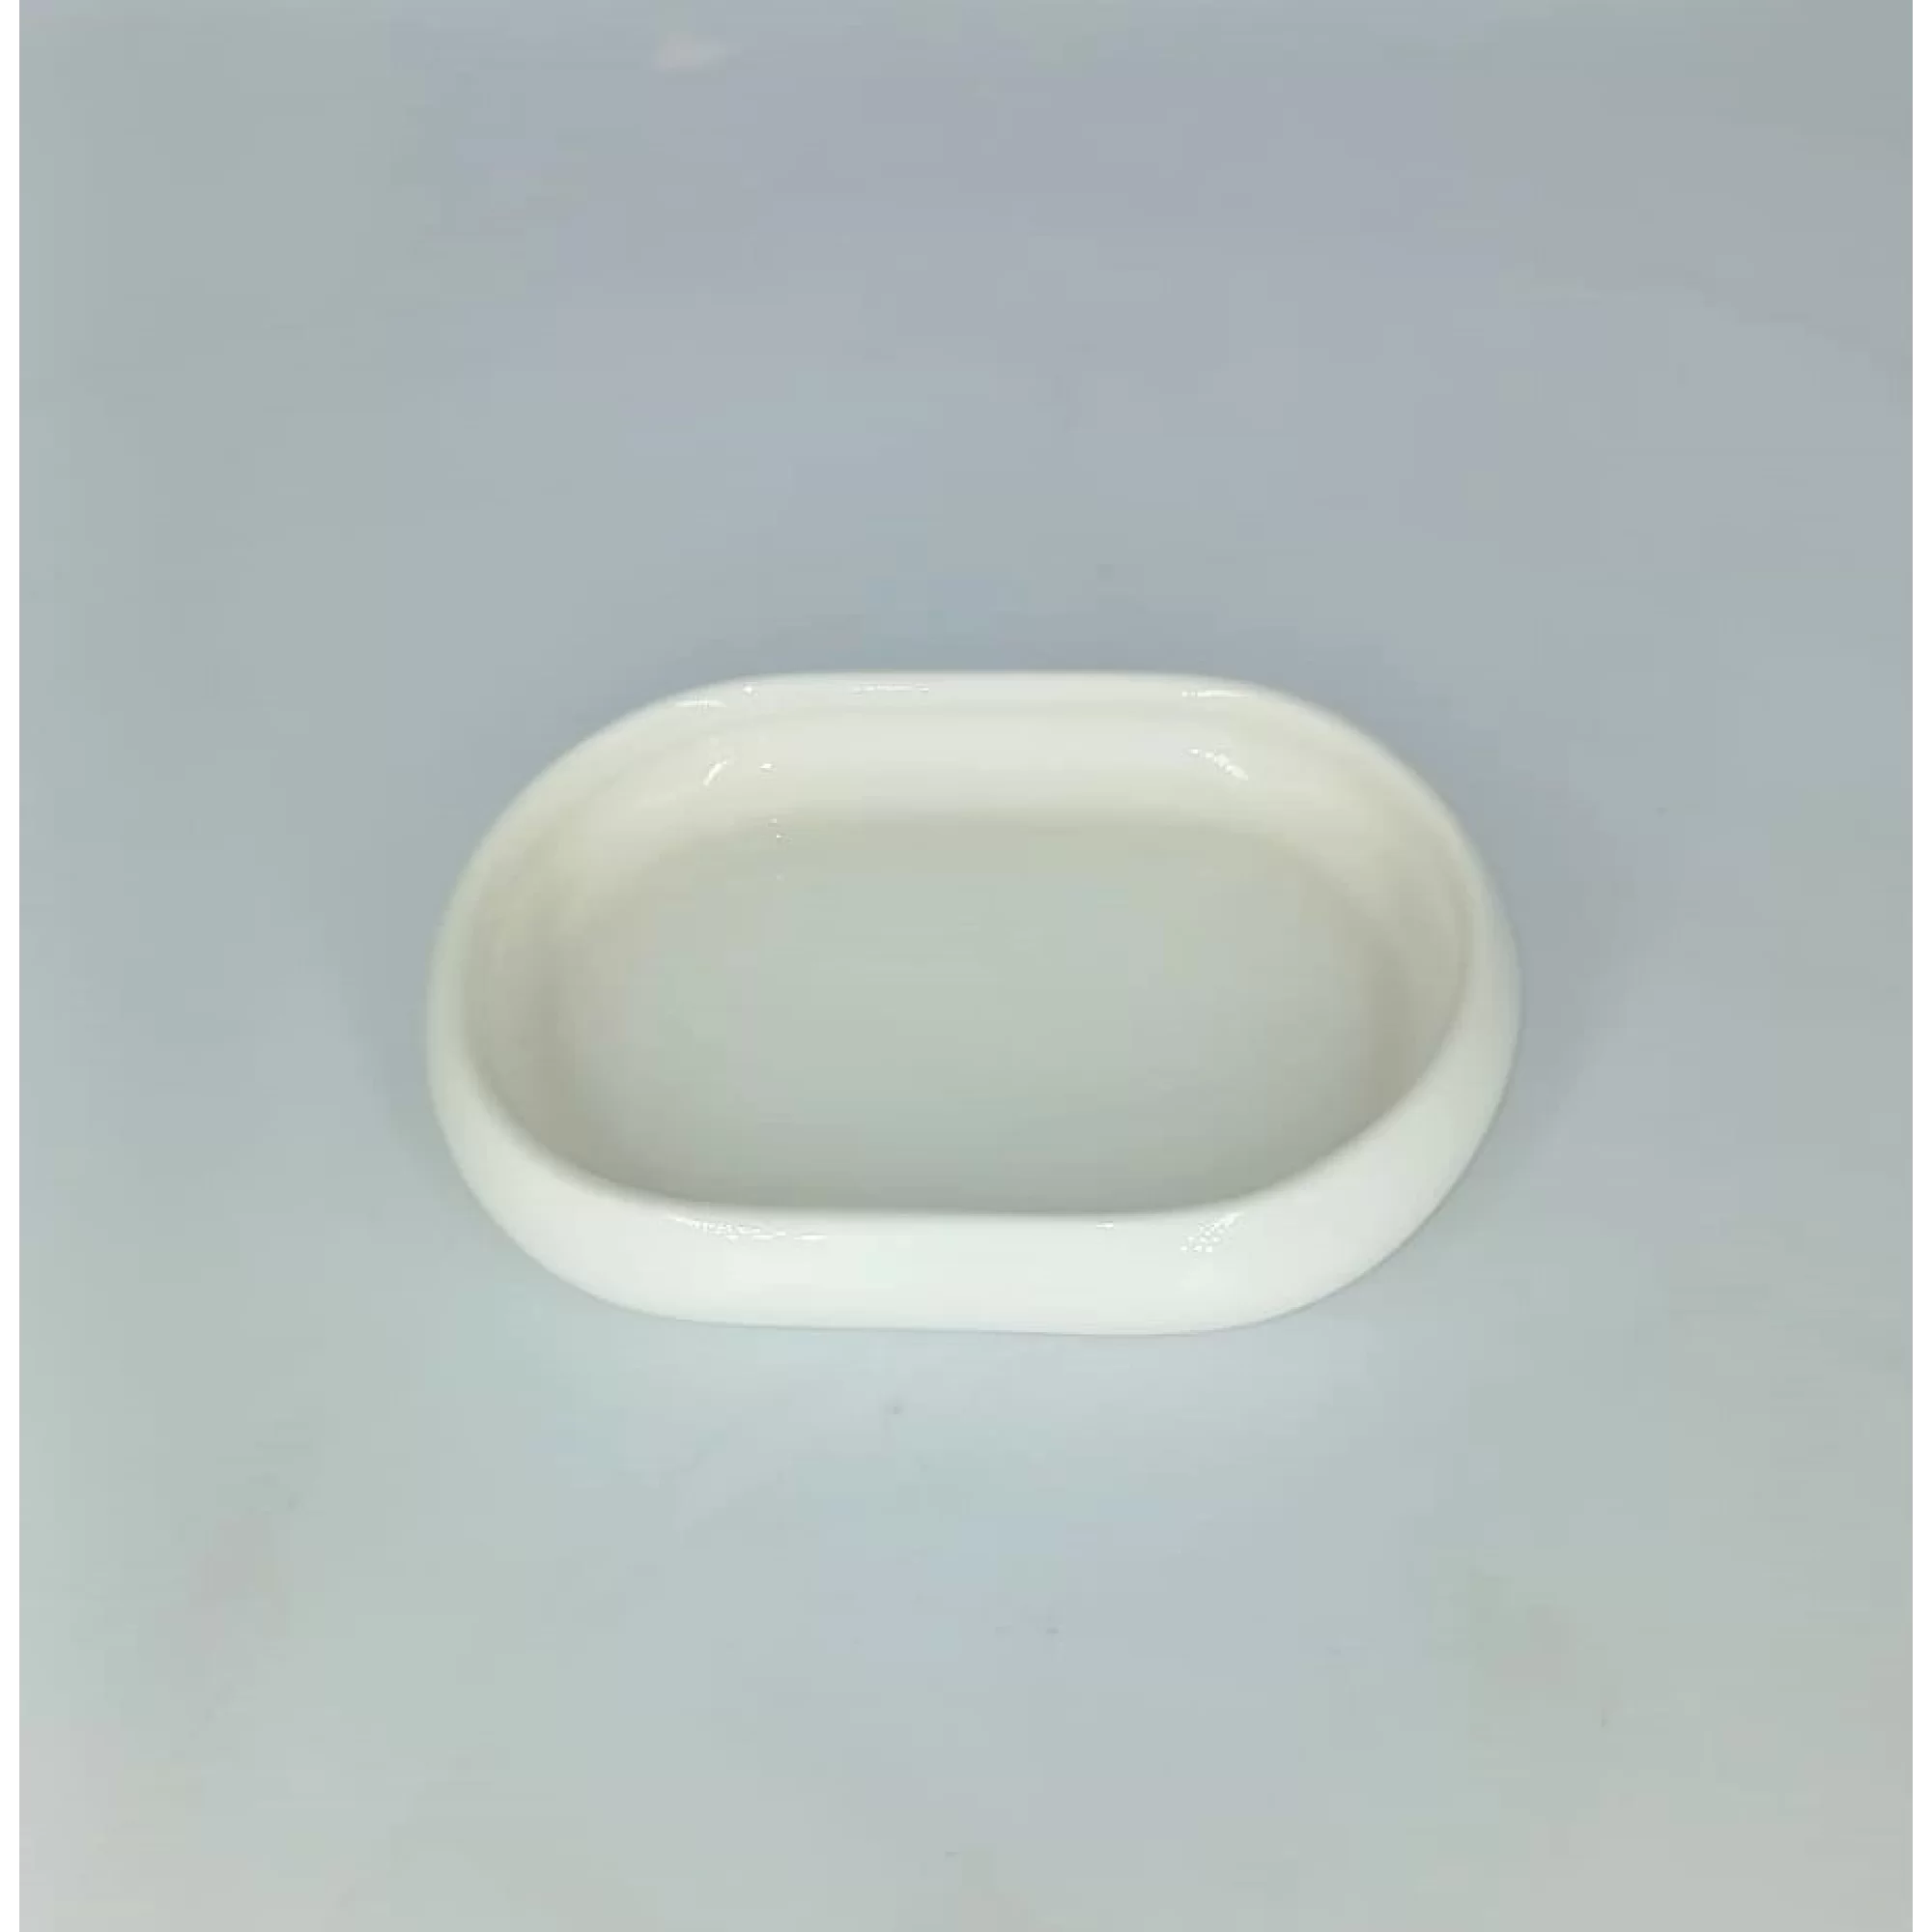 Lavin LVN 27984 Tabak Porselen Lupin Oval Adet 13x10 Cm